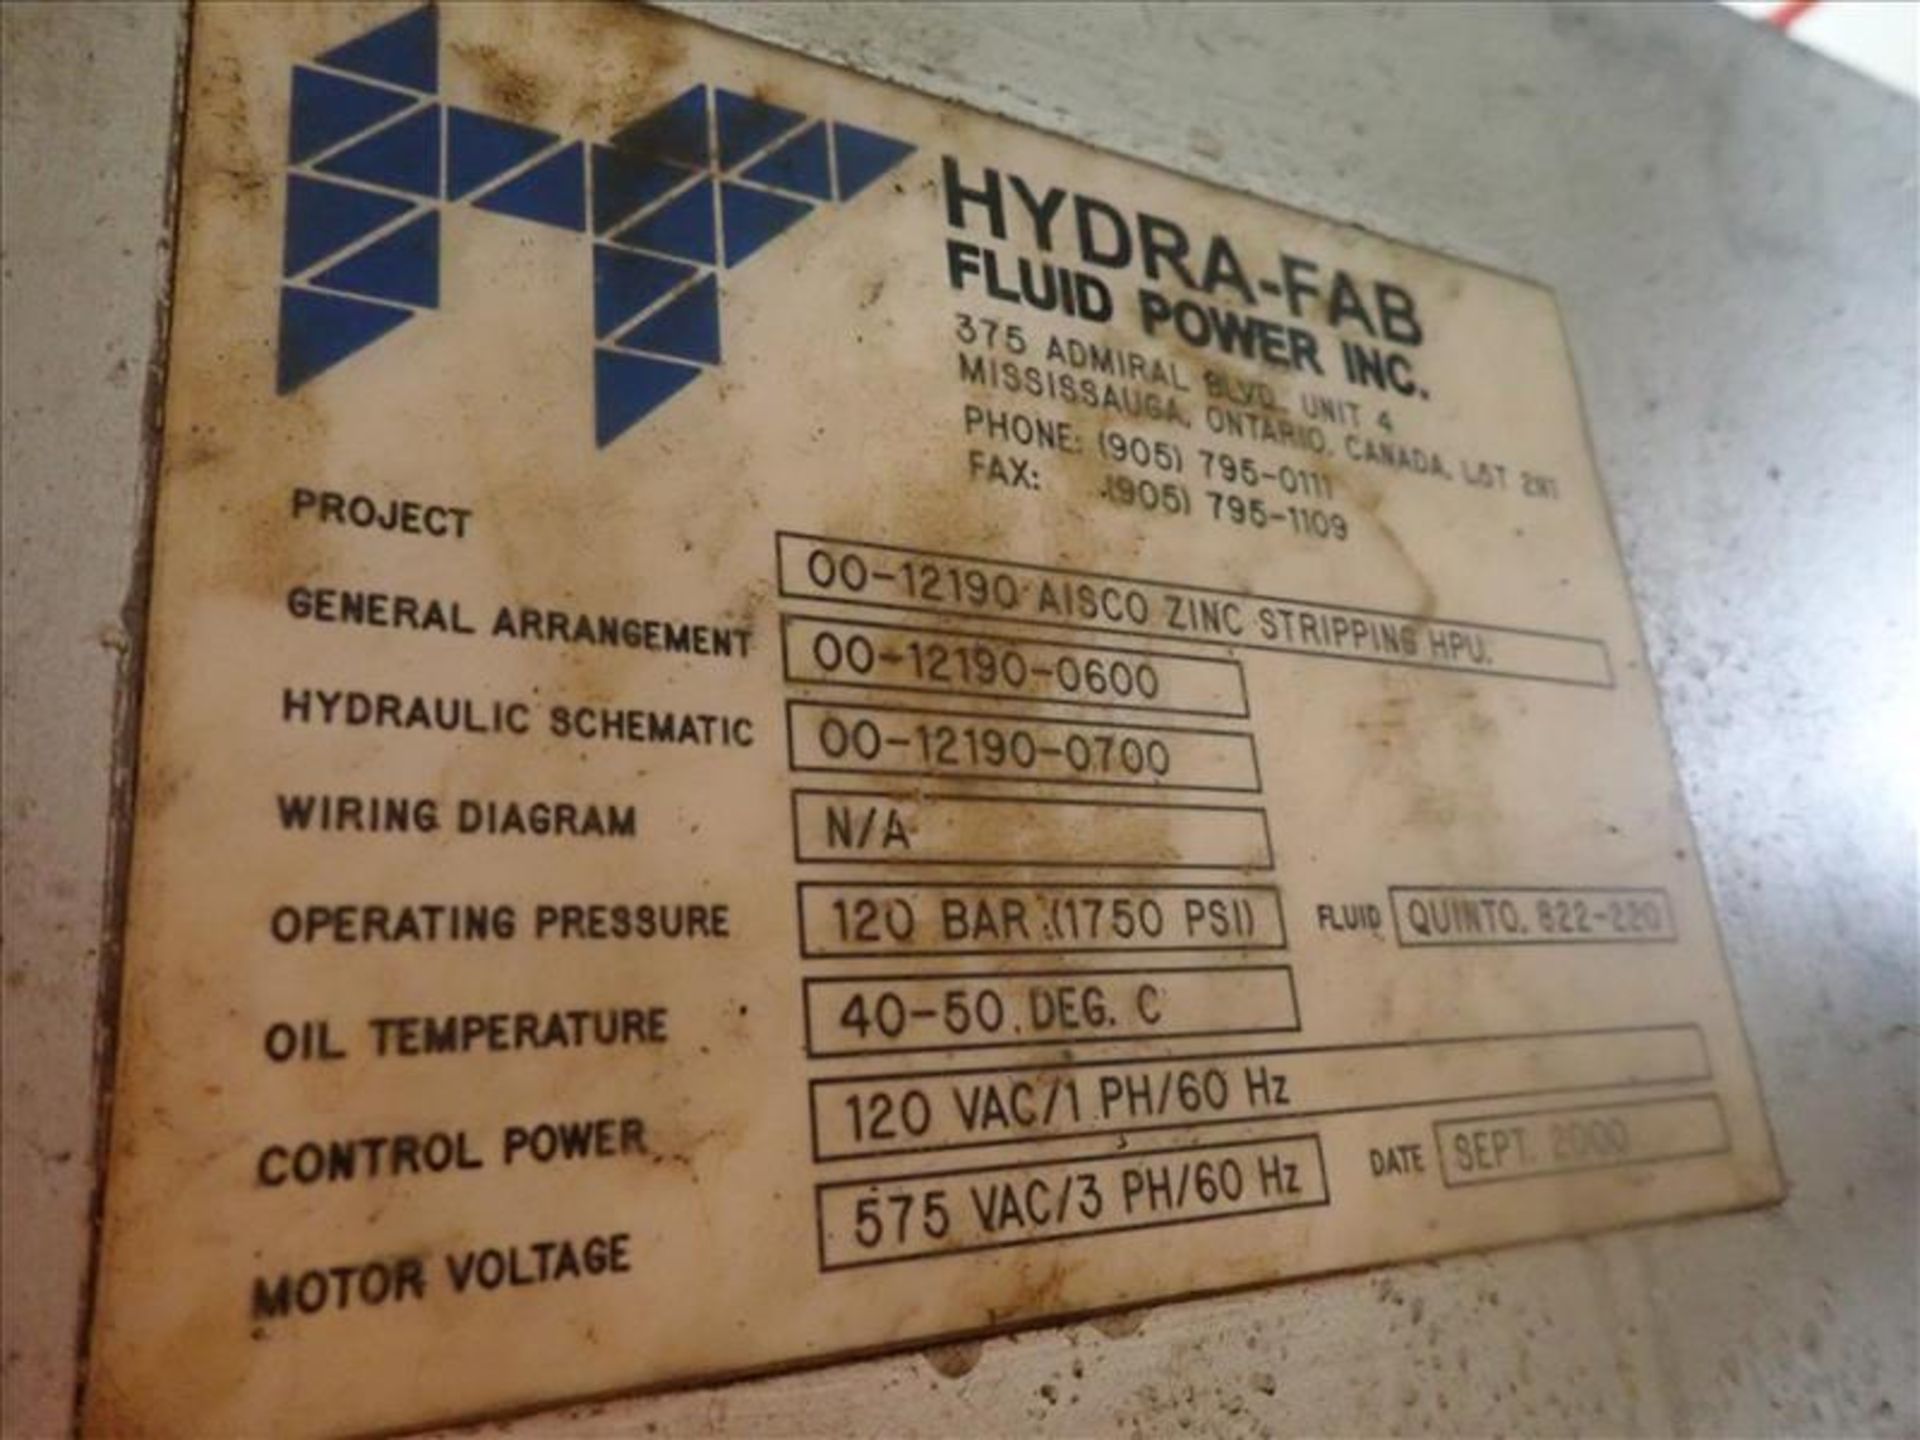 Hydra-Fab/AISCO hydraulic pack, proj. 00-12190, ser. no. 00-12190-0600 w/ (3) 50 hp motors (Tag 7693 - Image 3 of 4